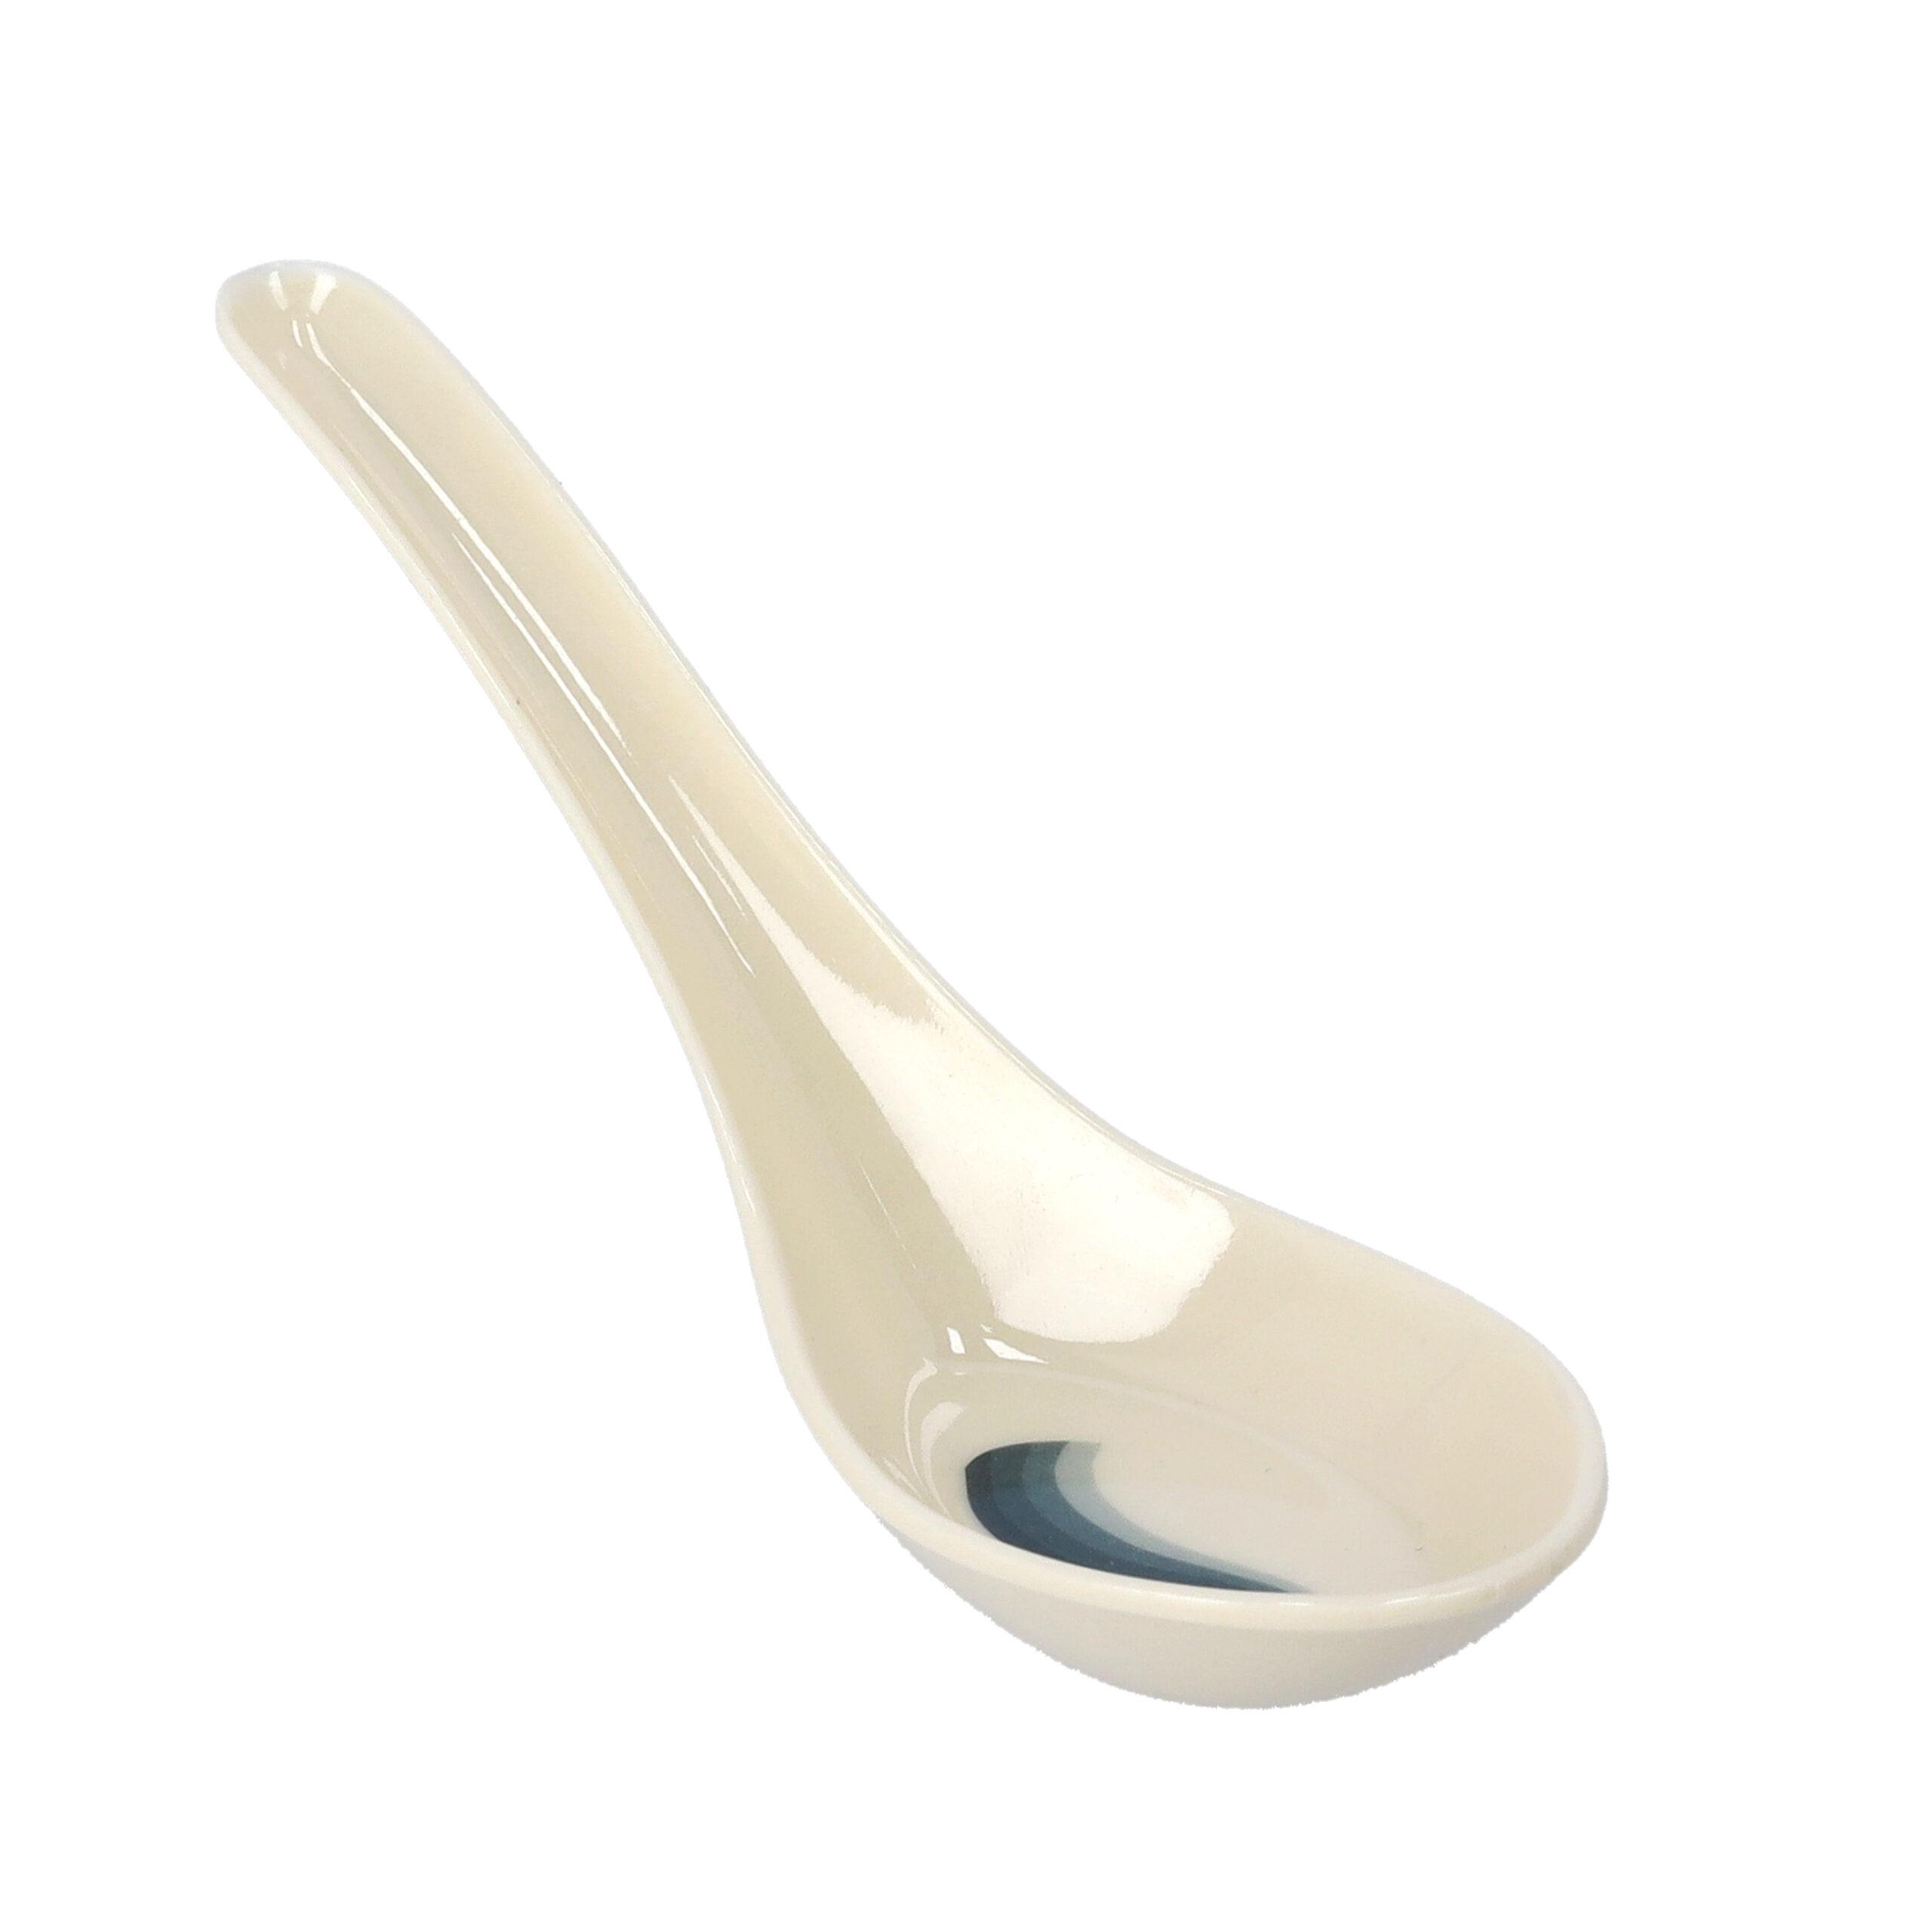 ملعقة تقديم طعام ميلامين 5.5 بوصة Royalford - 5.5" Professional Melamine Spoon - Cooking And Serving Spoon With Grip Handle - cG9zdDo0MDYxNDA=